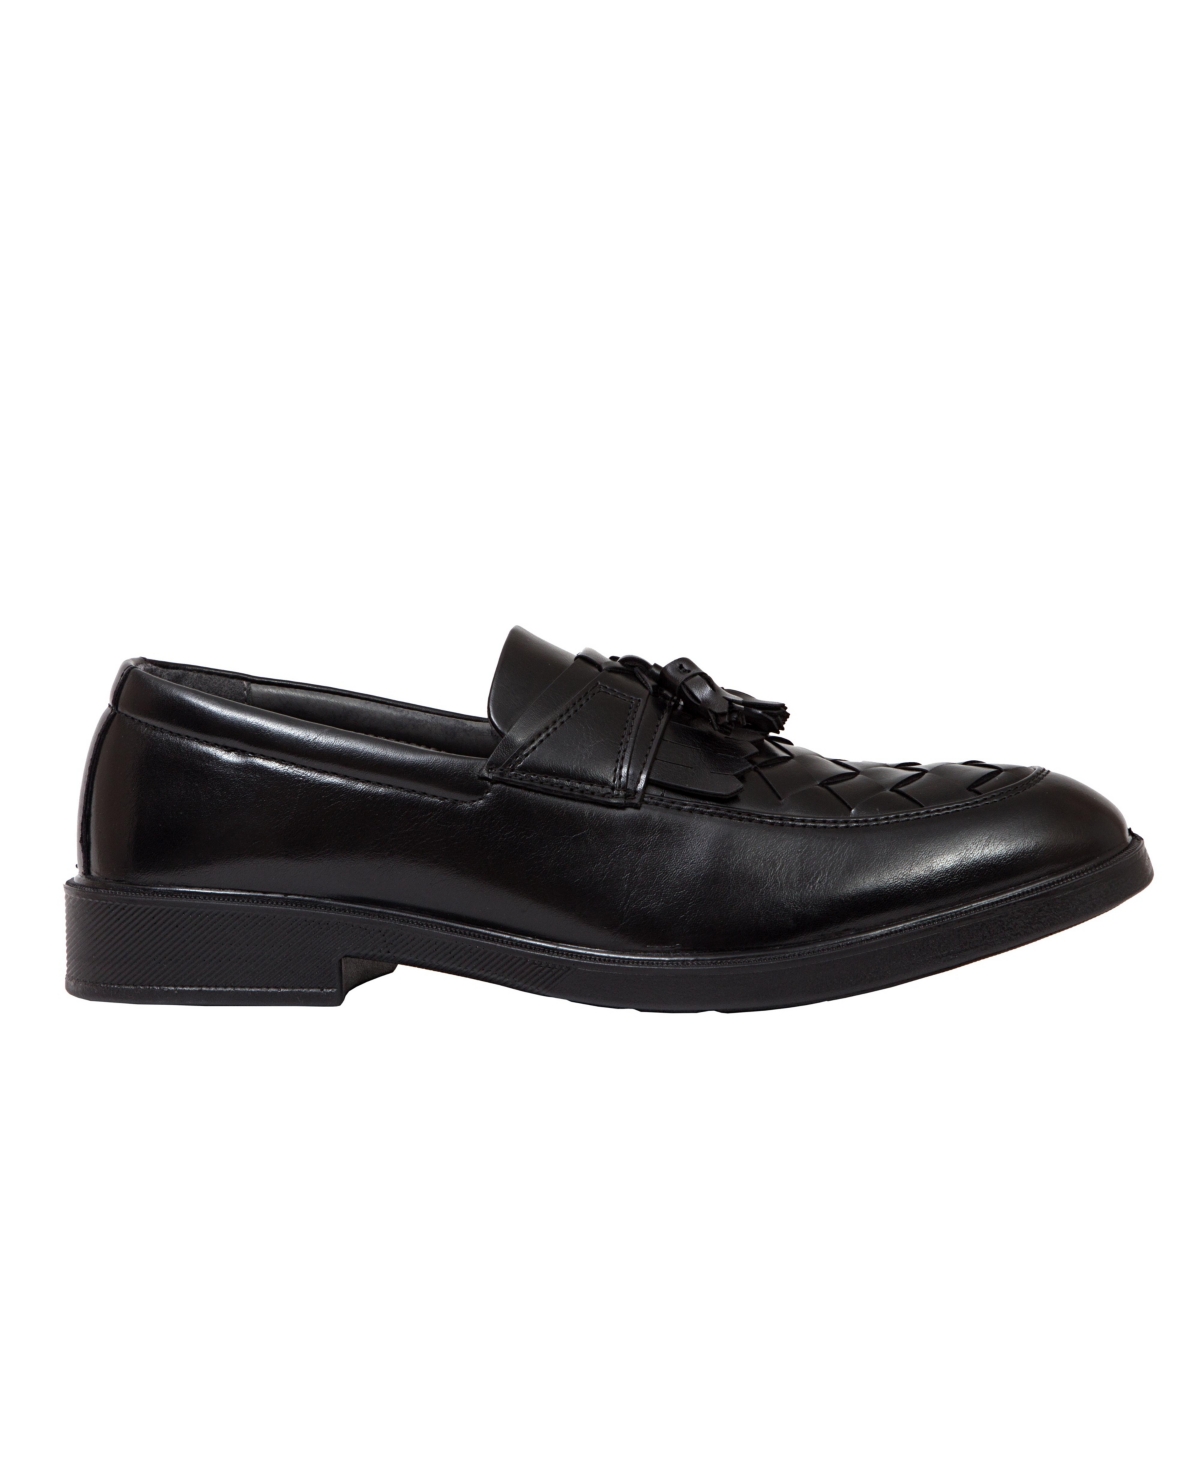 Men's Borough Kiltie Tassel Comfort Loafers - Black